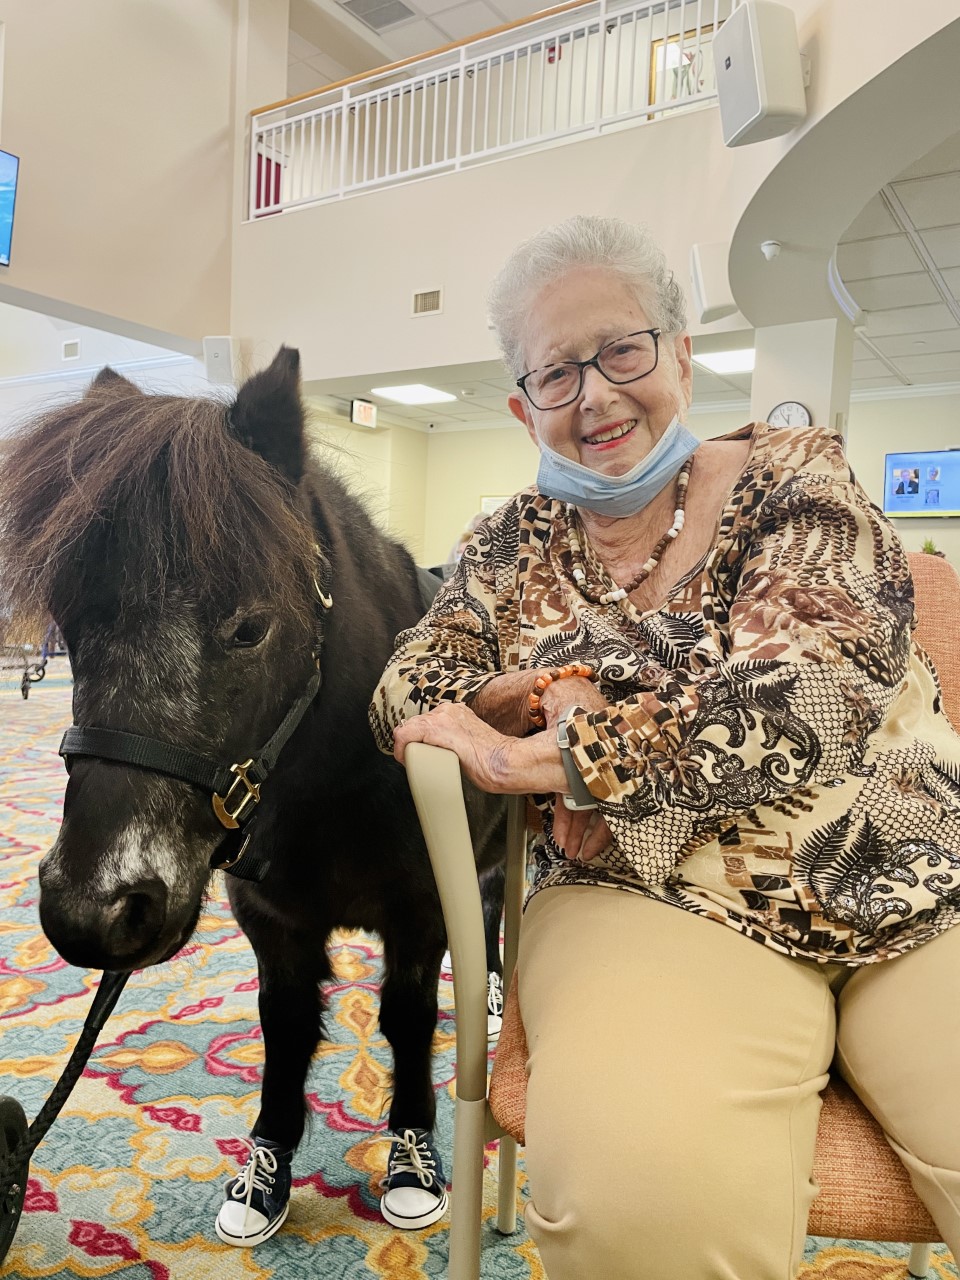 Miniature Horse Draws Smiles from Seniors